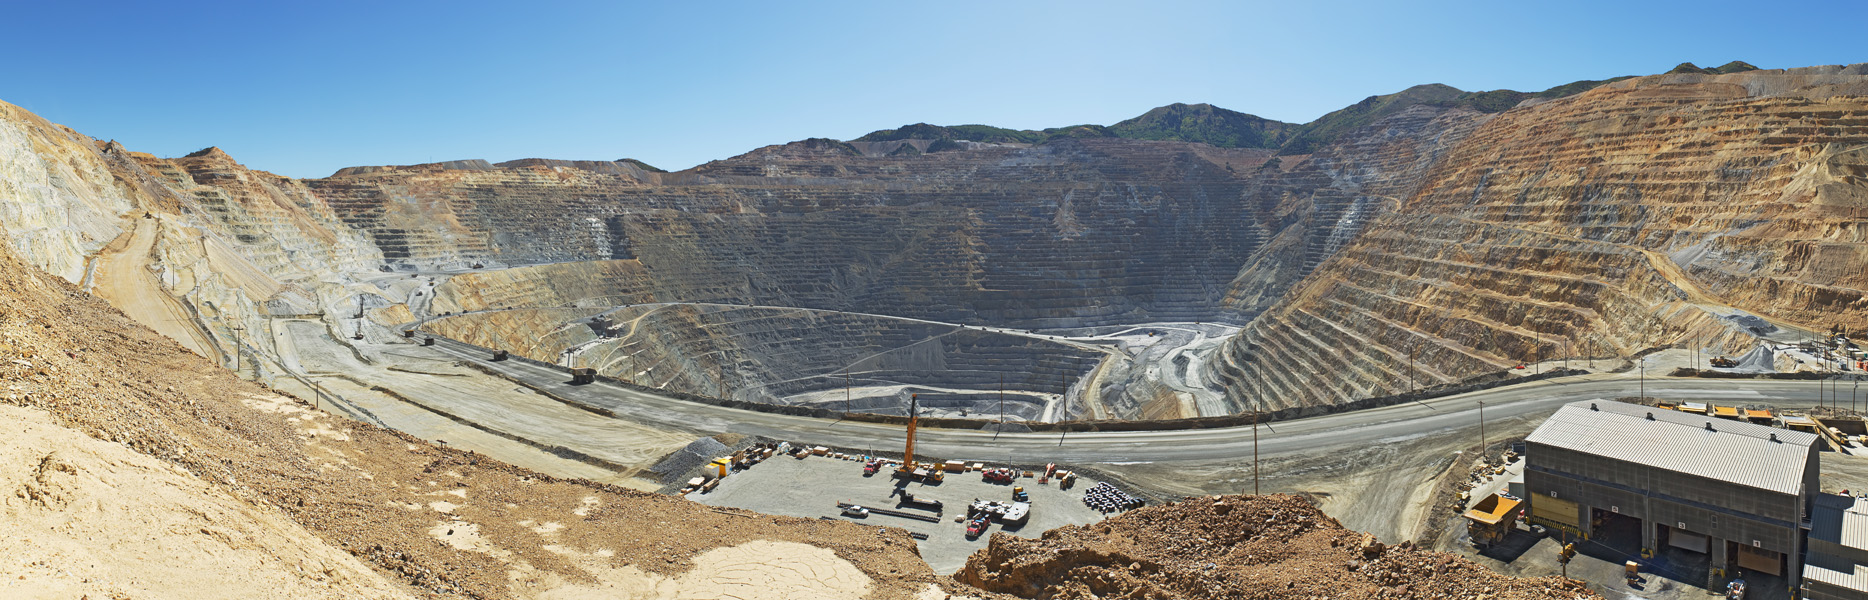 Bingham Canyon Copper Mine #2